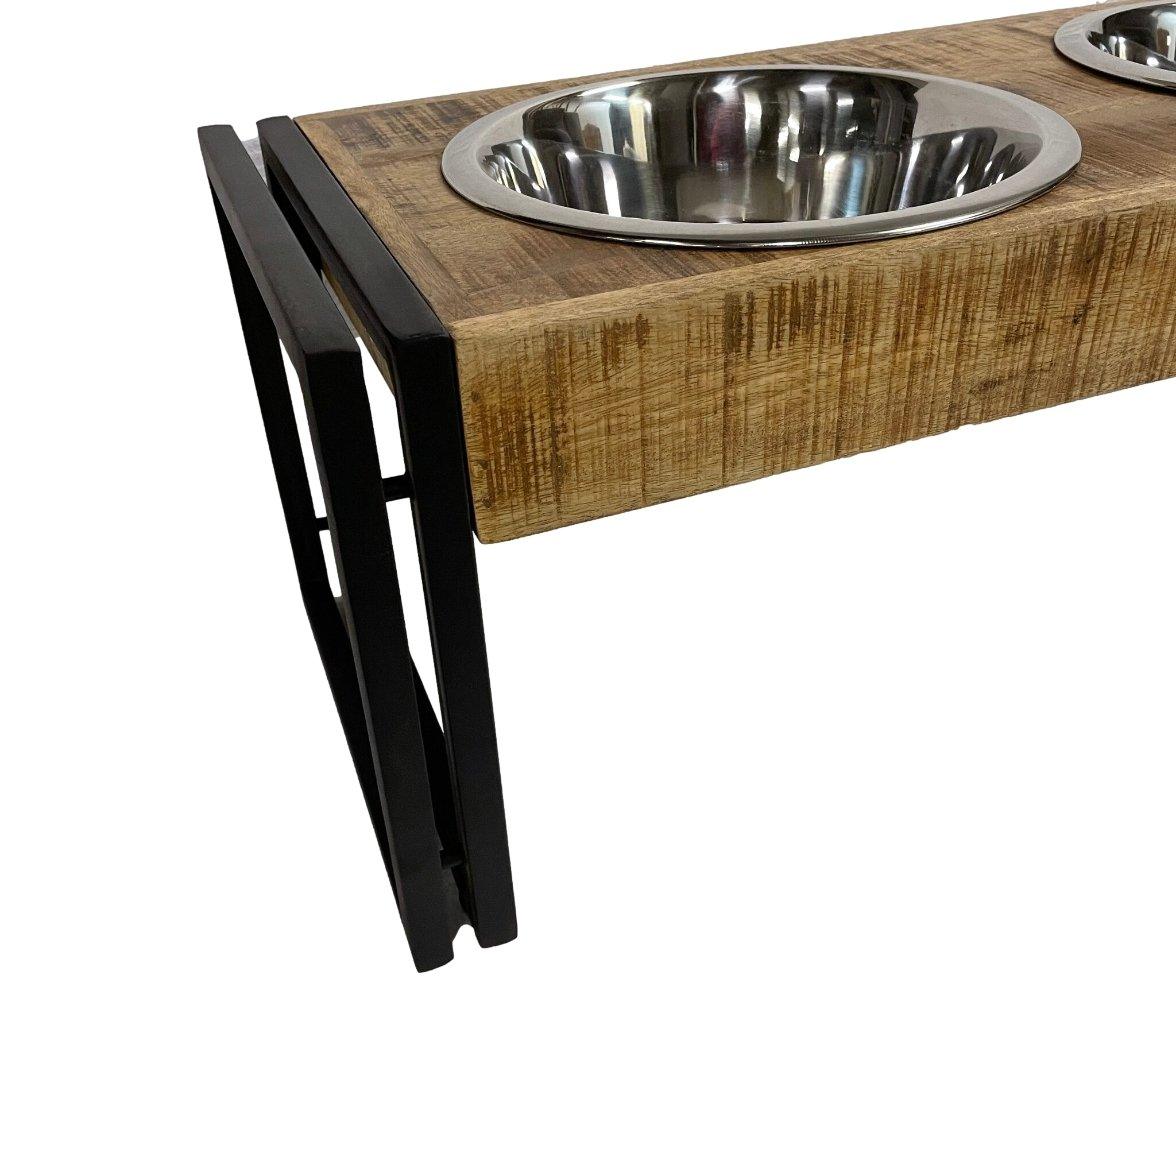 Large animal pet feeder dining set - Rustic Furniture Outlet